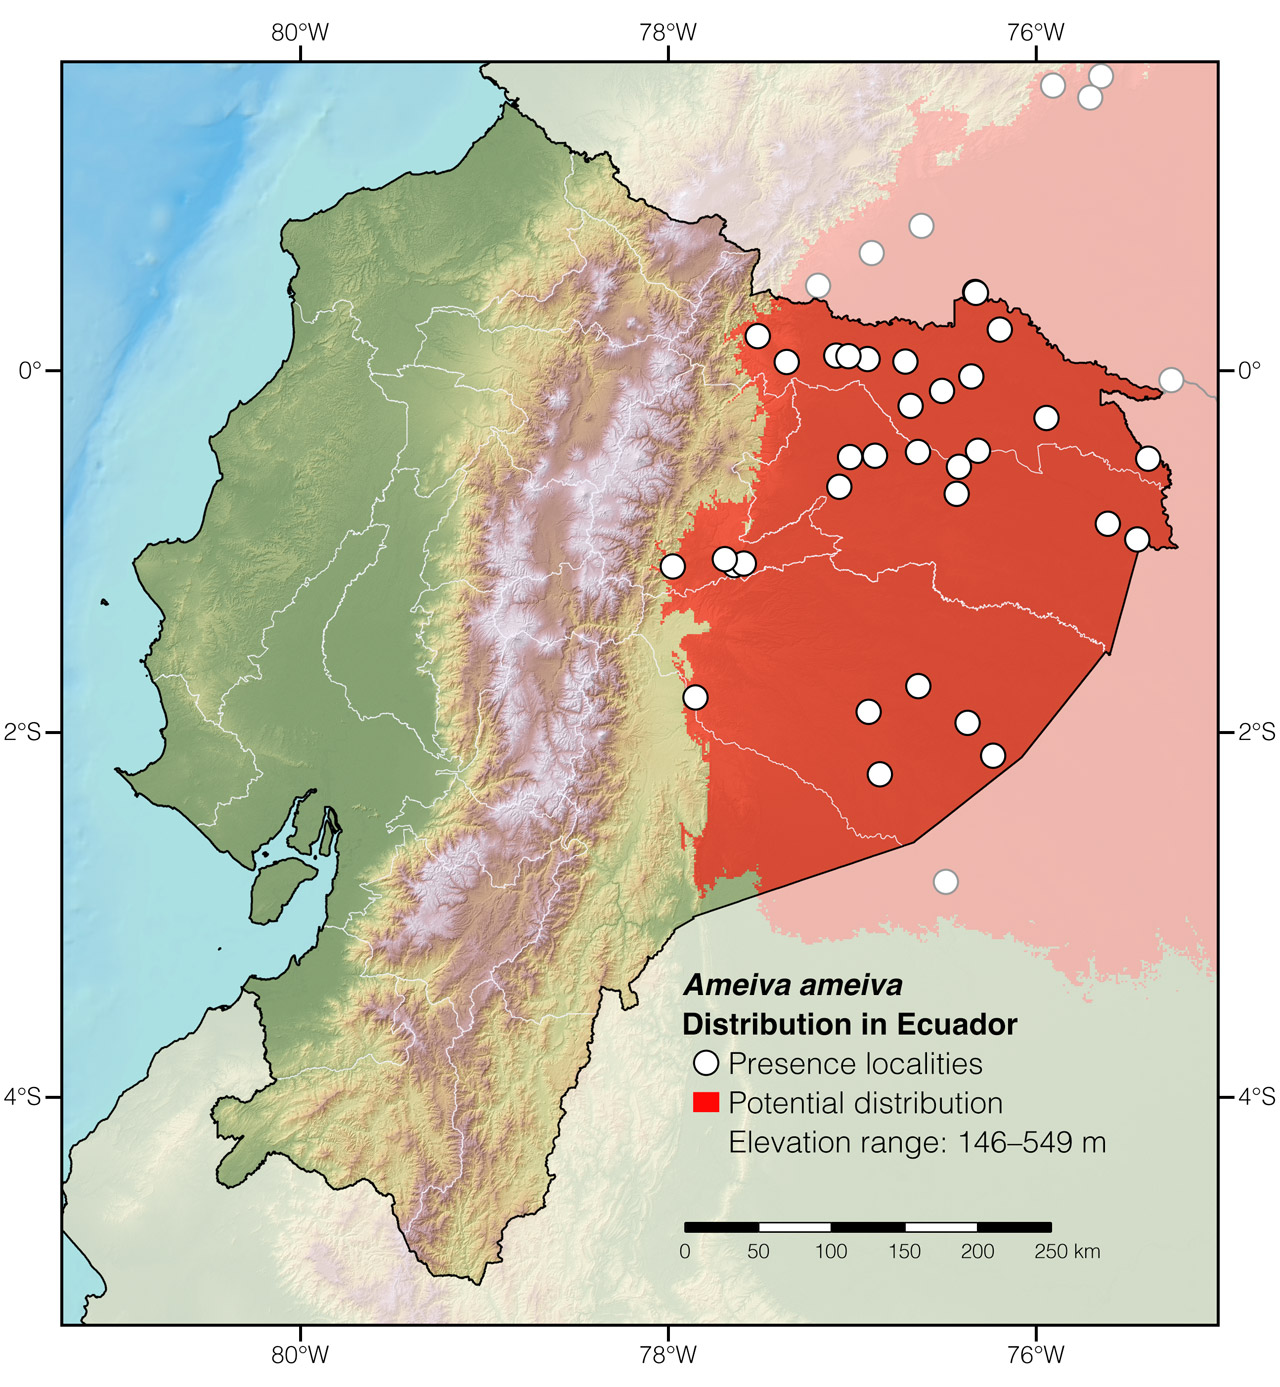 Distribution of Ameiva ameiva in Ecuador